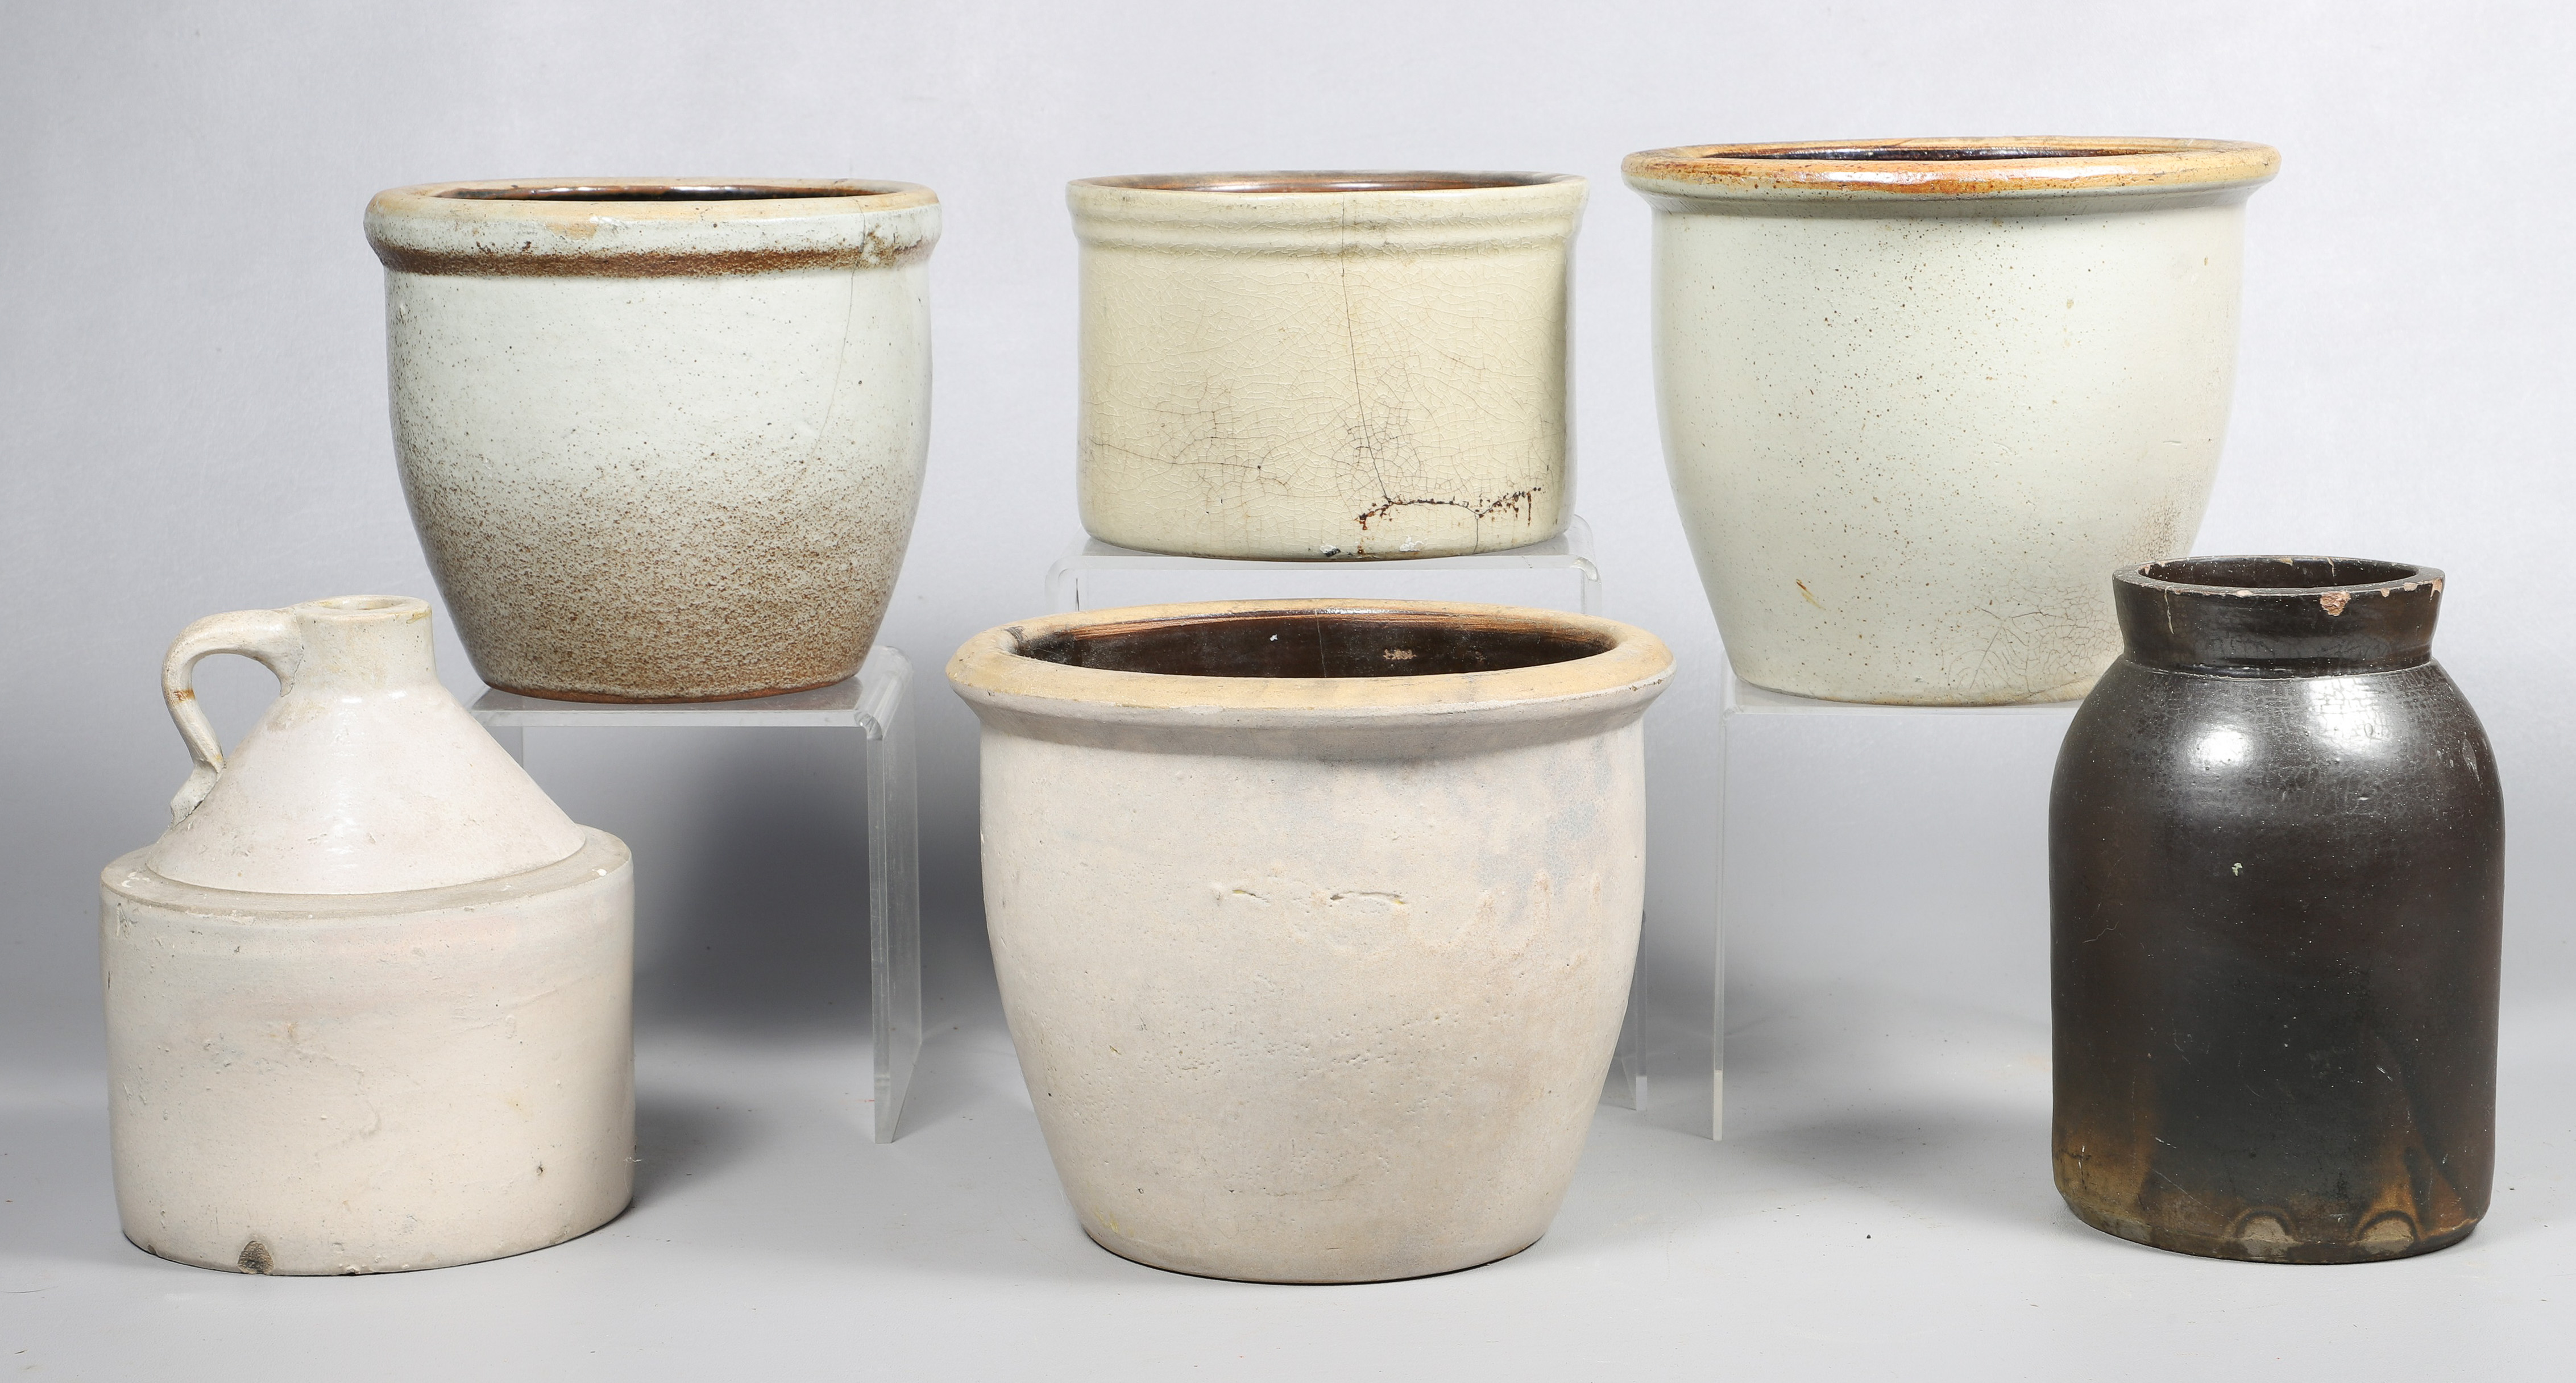  6 Stoneware jugs jars and crocks 2e1960